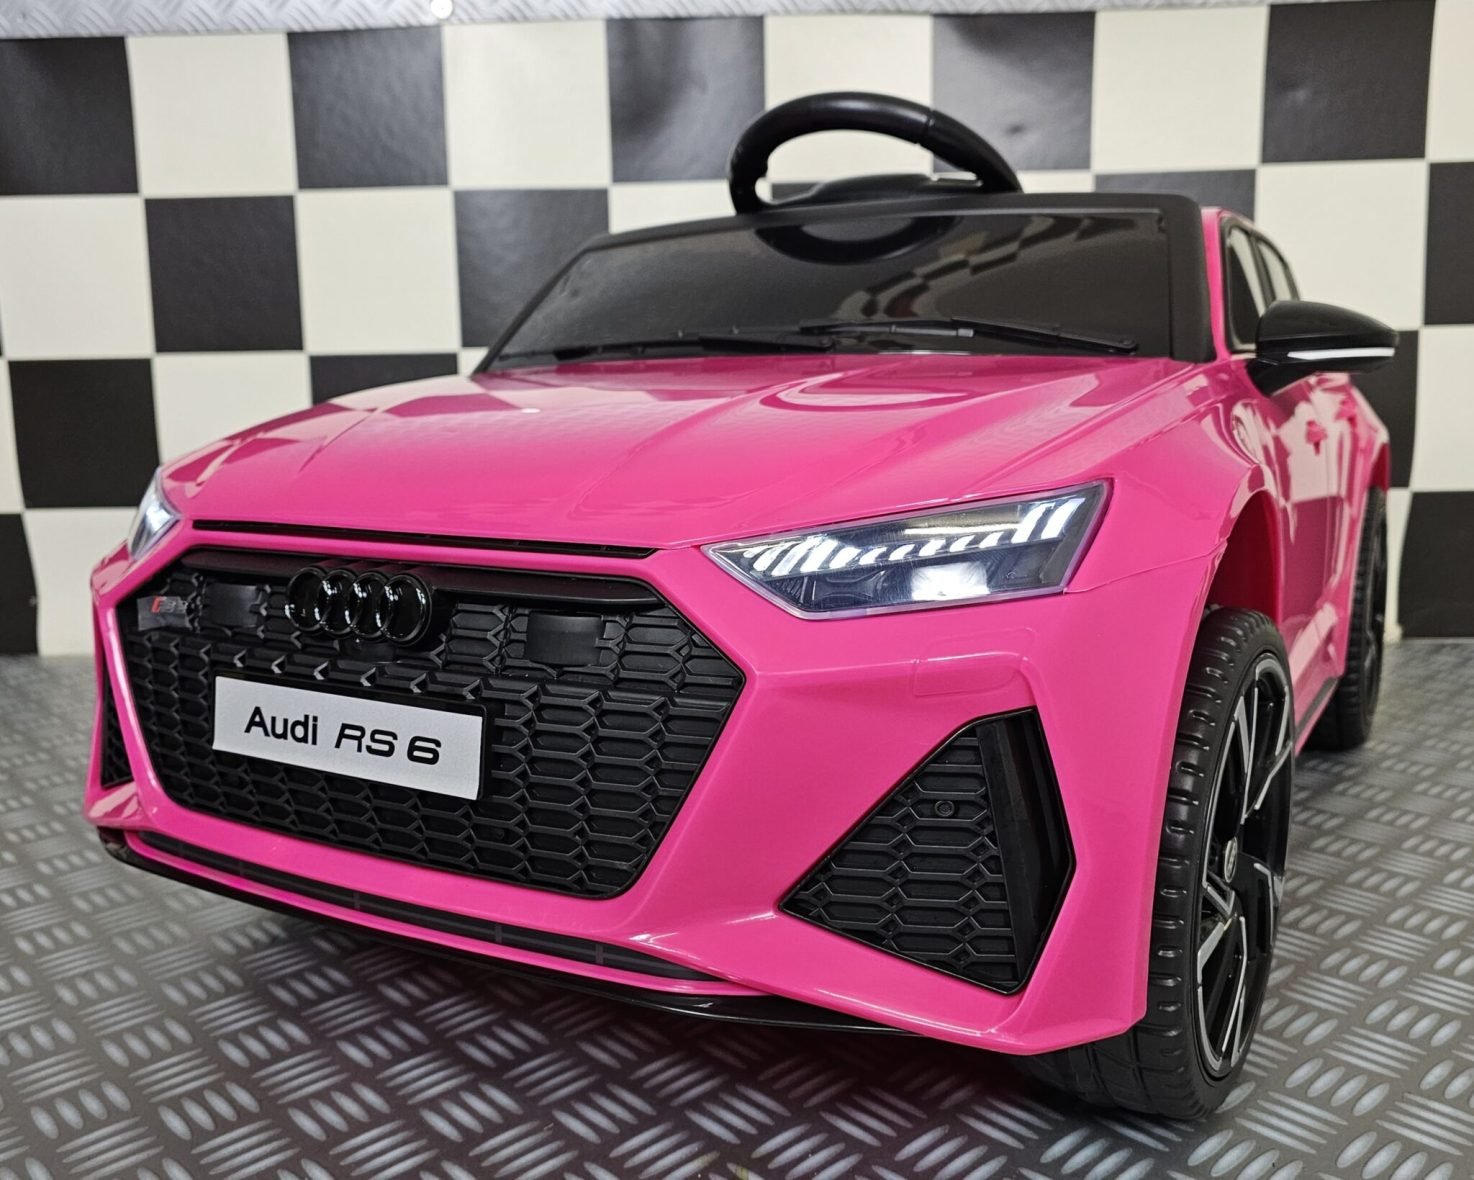 Battery children’s car Audi RS6 12 volt pink